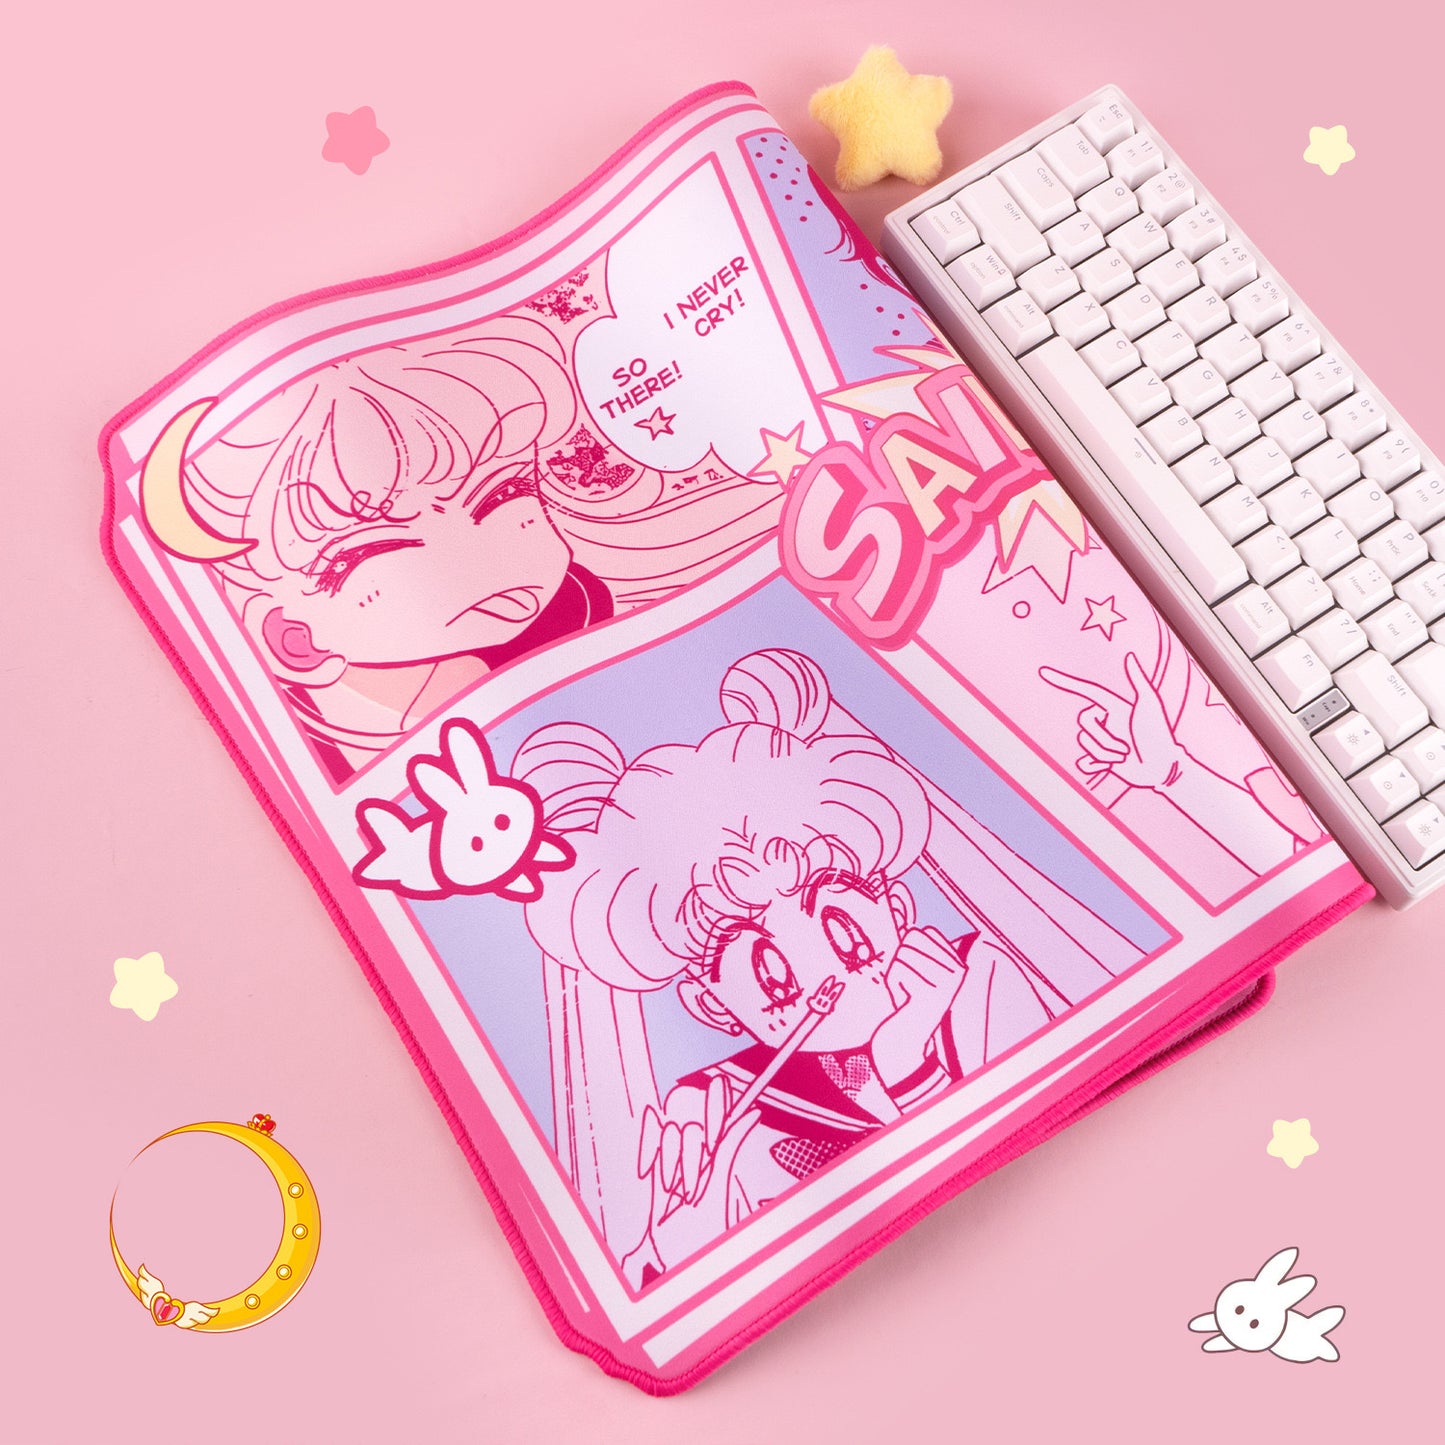 BlingKiyo Sailor Moon Larege Mouse Pad